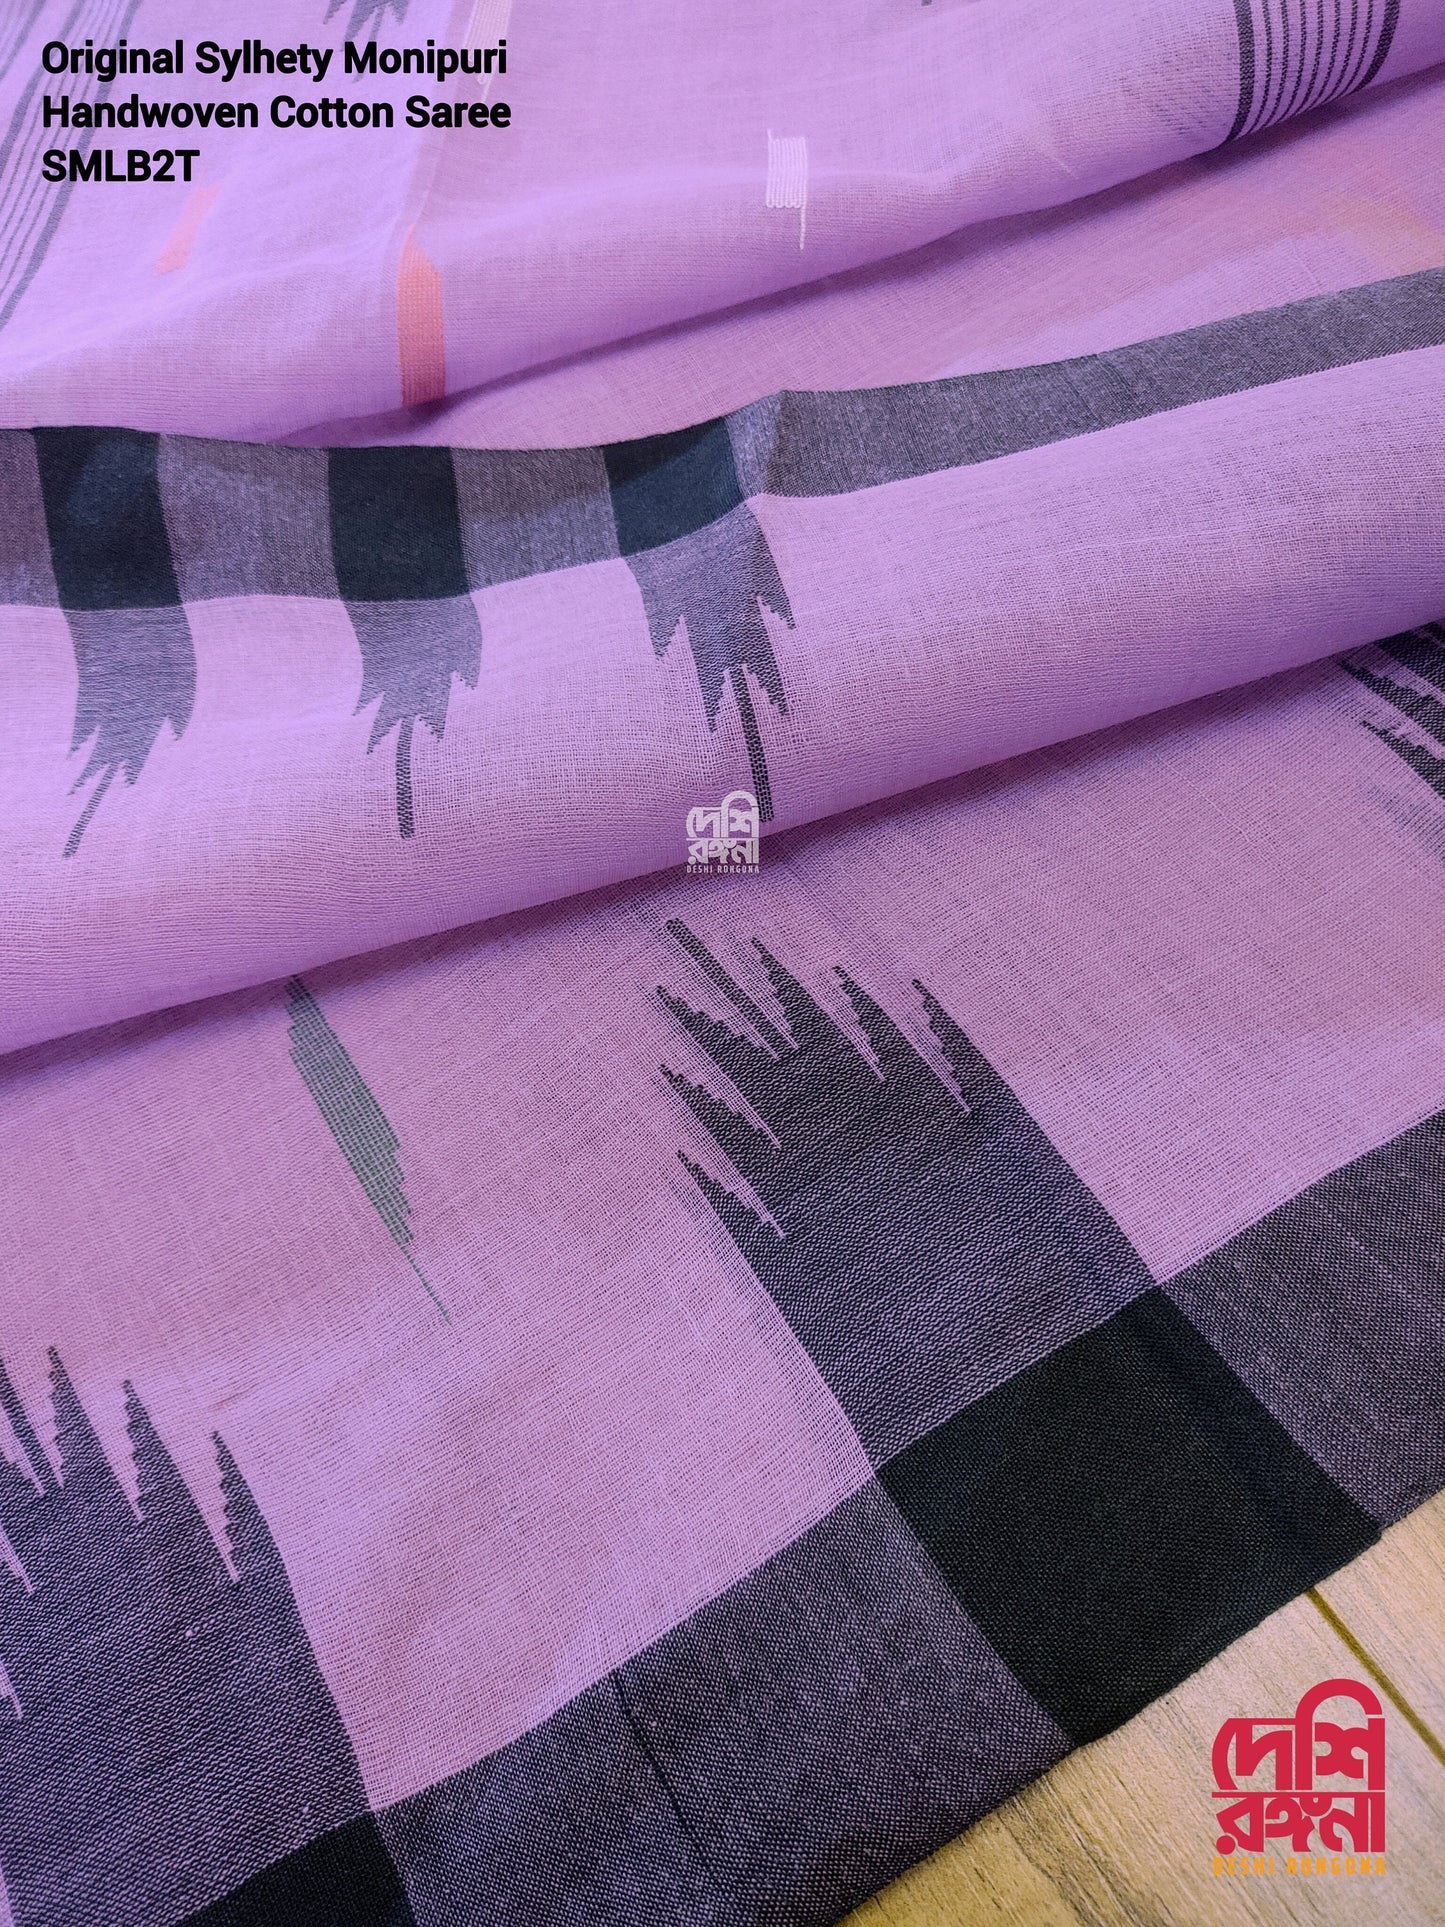 Sylheti Original Monipuri Handwoven Soft Cotton Saree, Beautiful Lavender with Black Hand Woven Border,Bangladeshi Tribal Traditional Saree